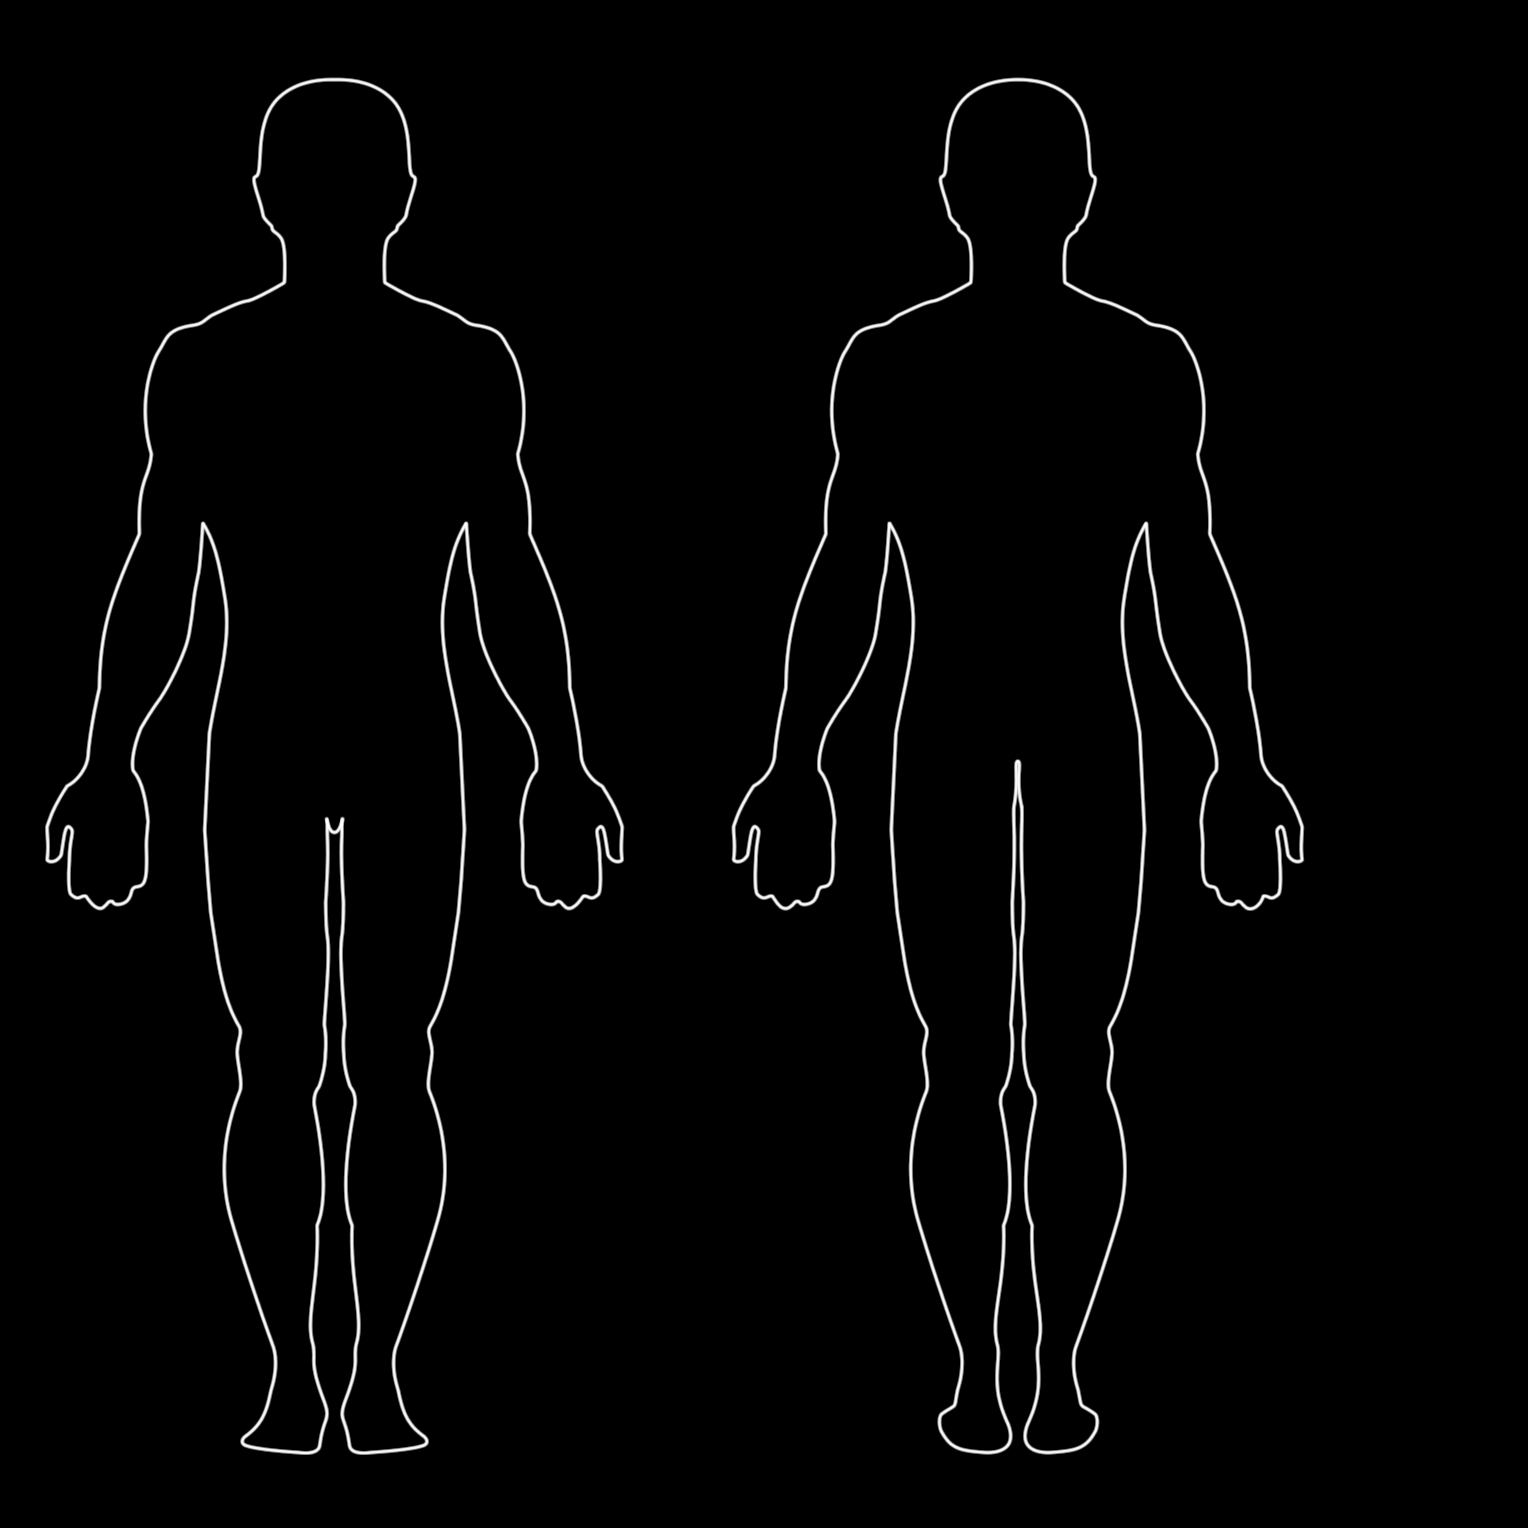 Human body outline - Yr 4 Mov